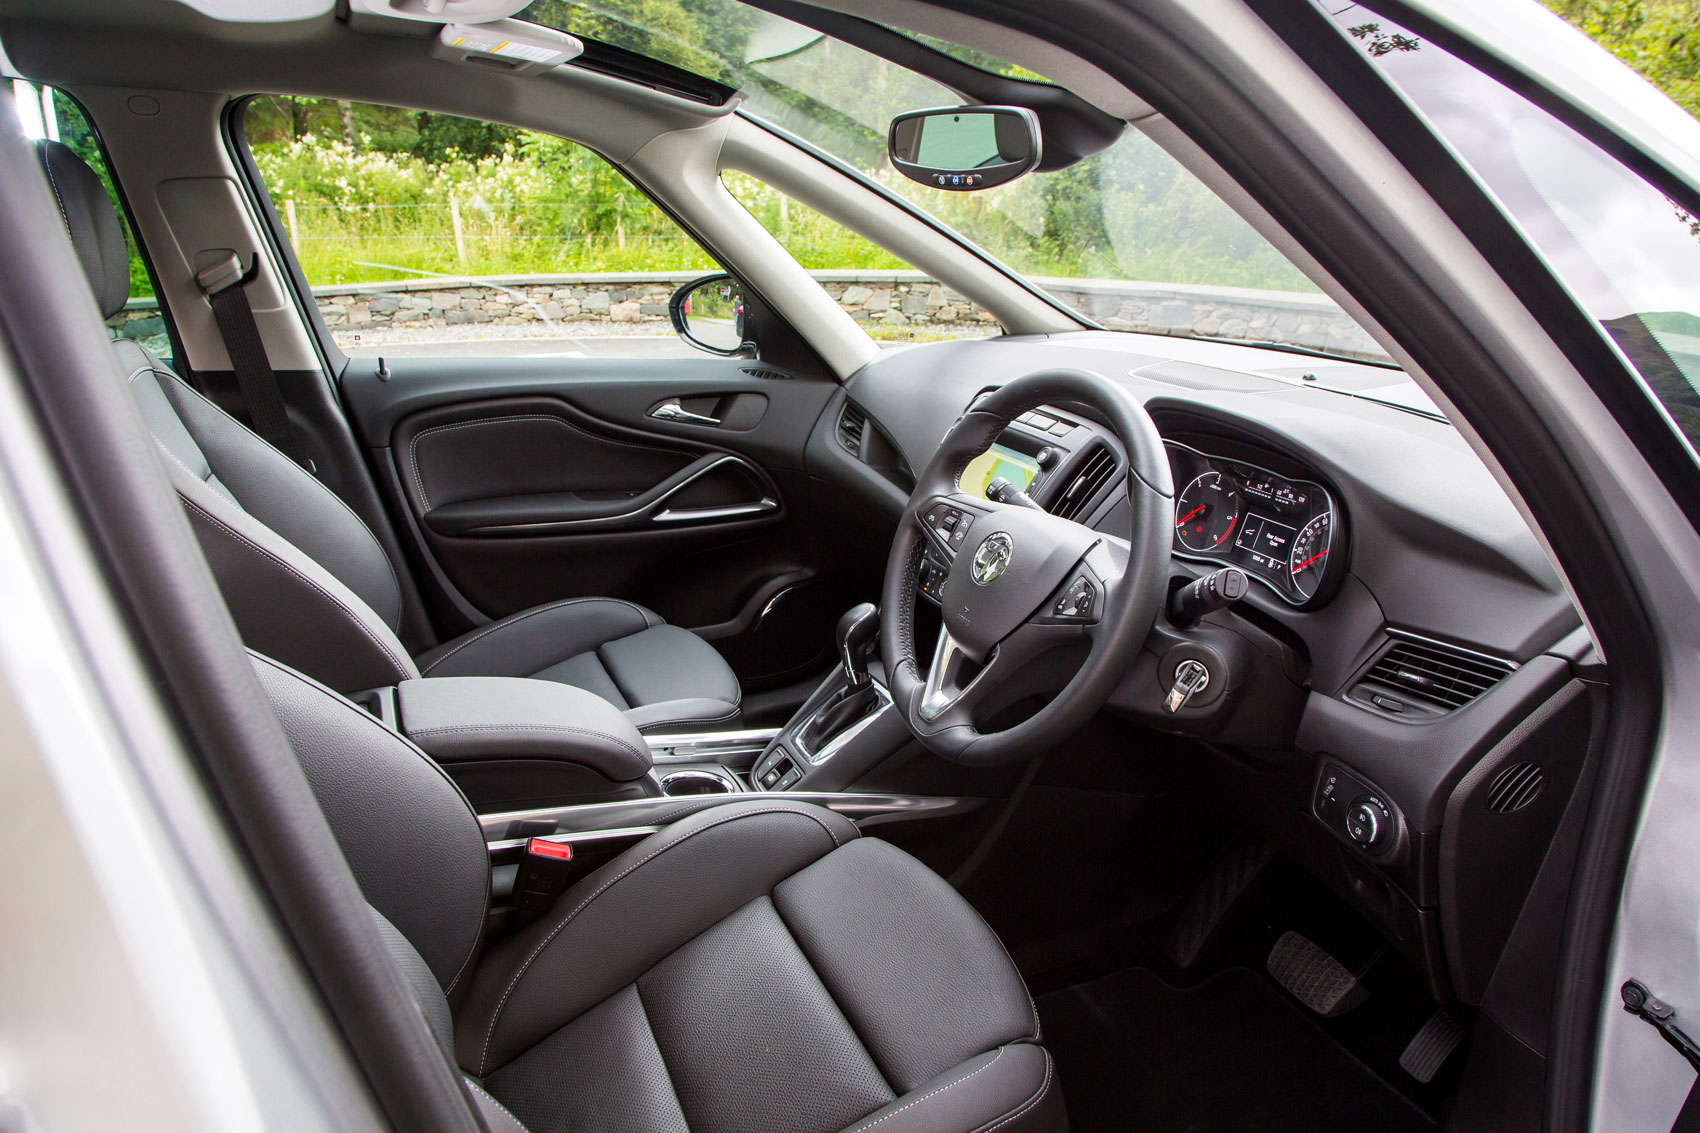 Vauxhall Zafira Tourer interior